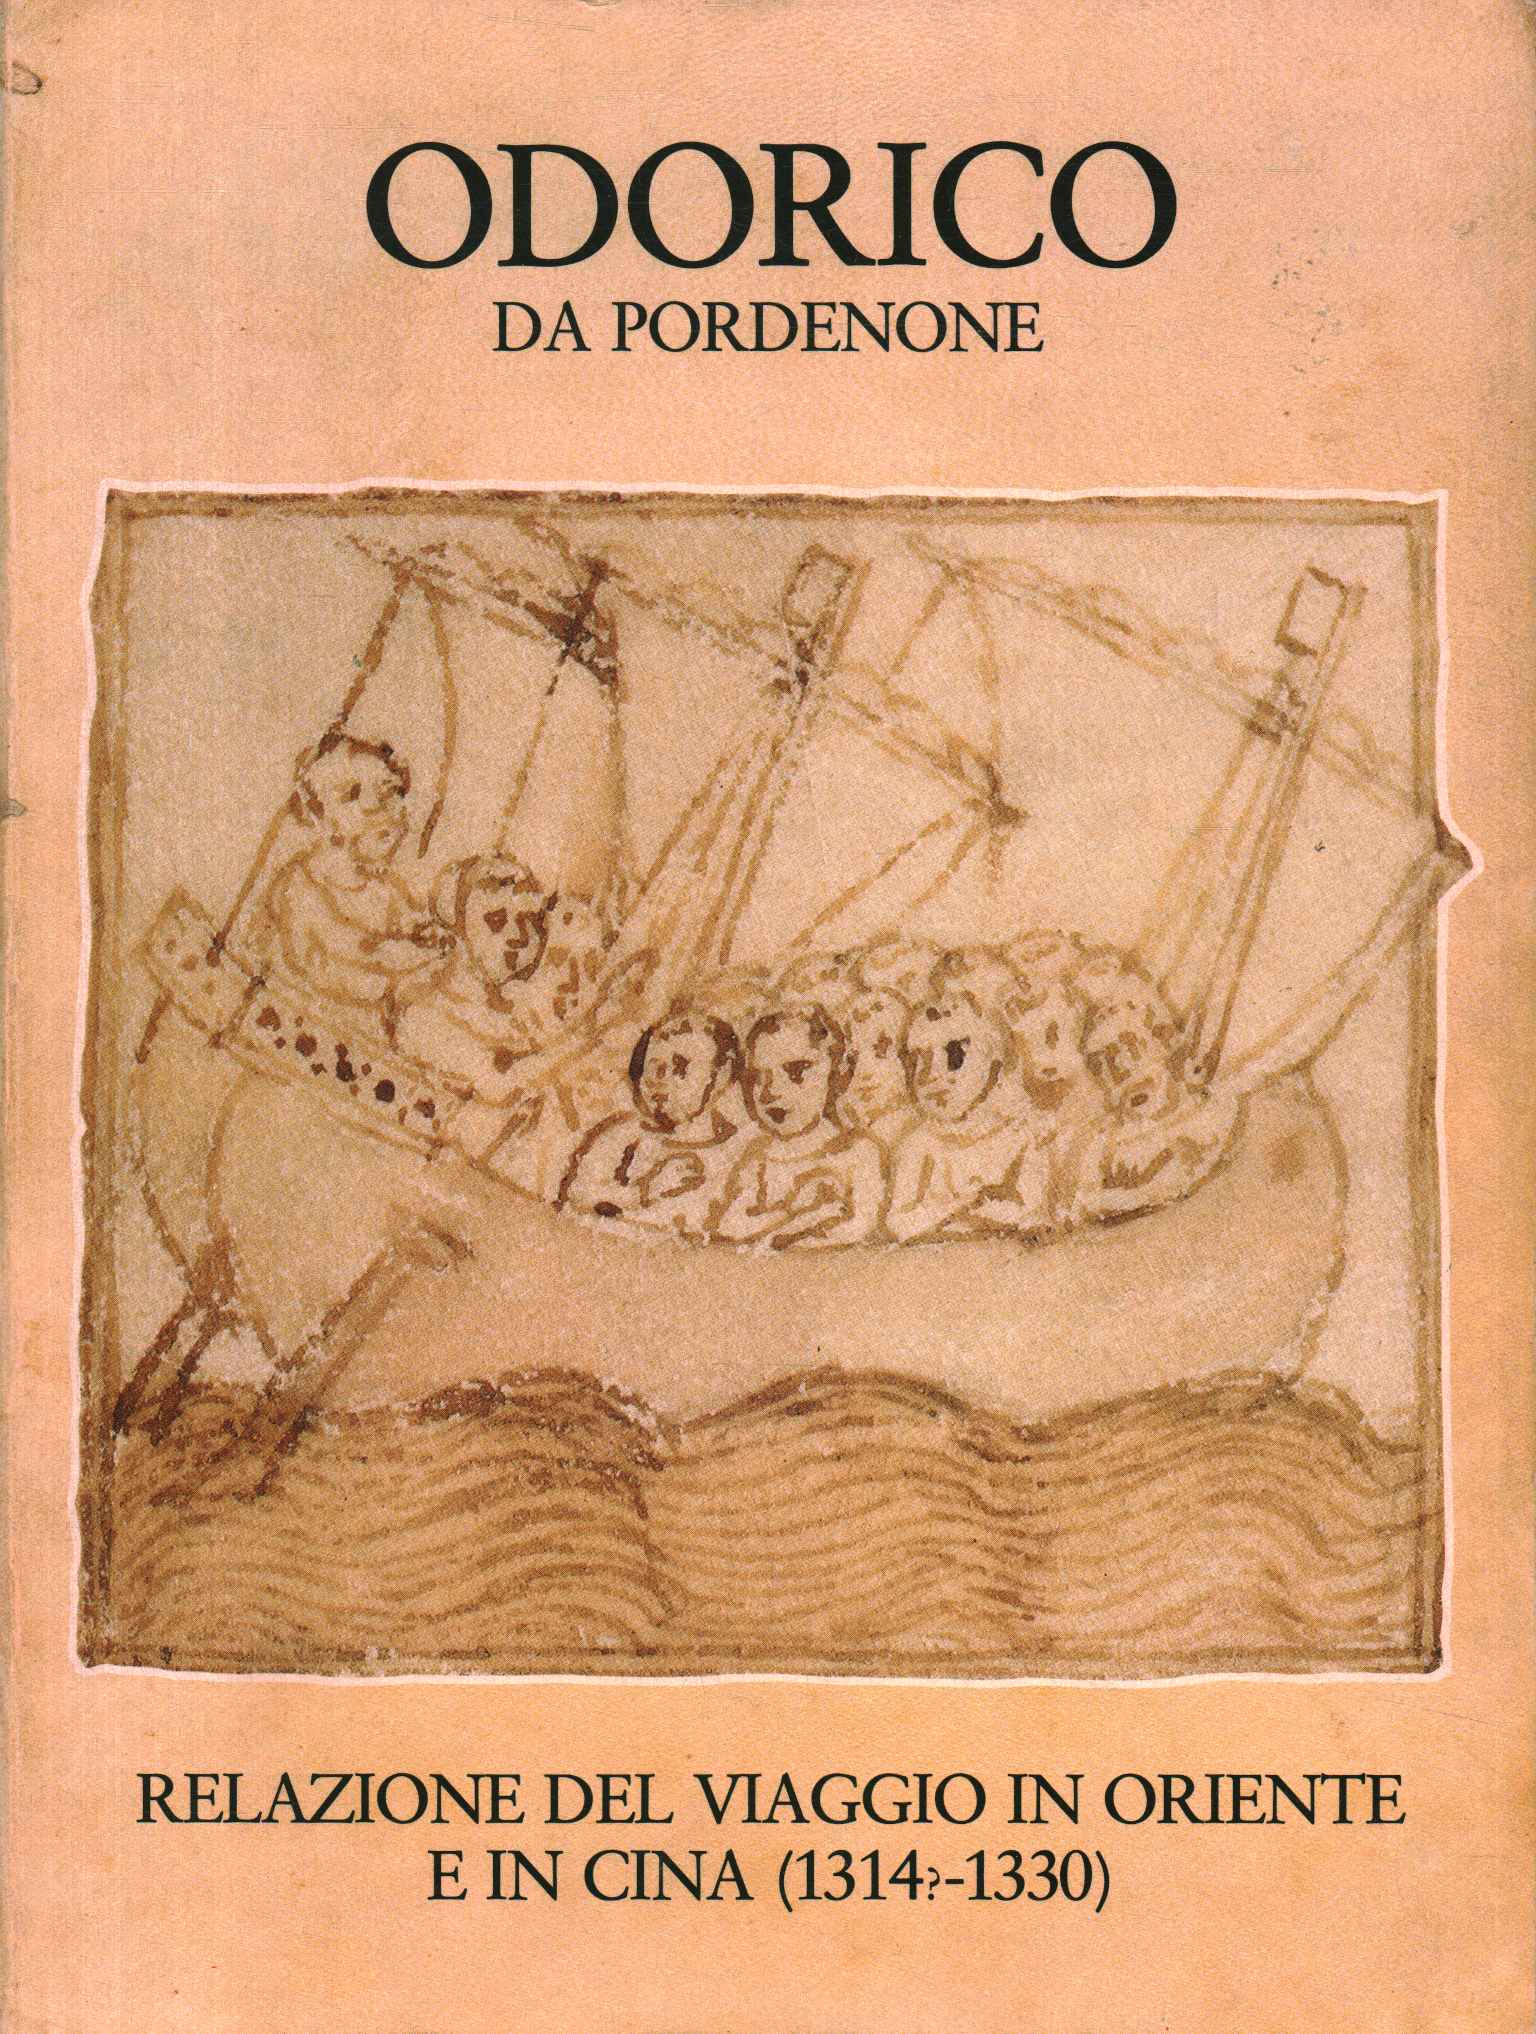 Odorico from Pordenone